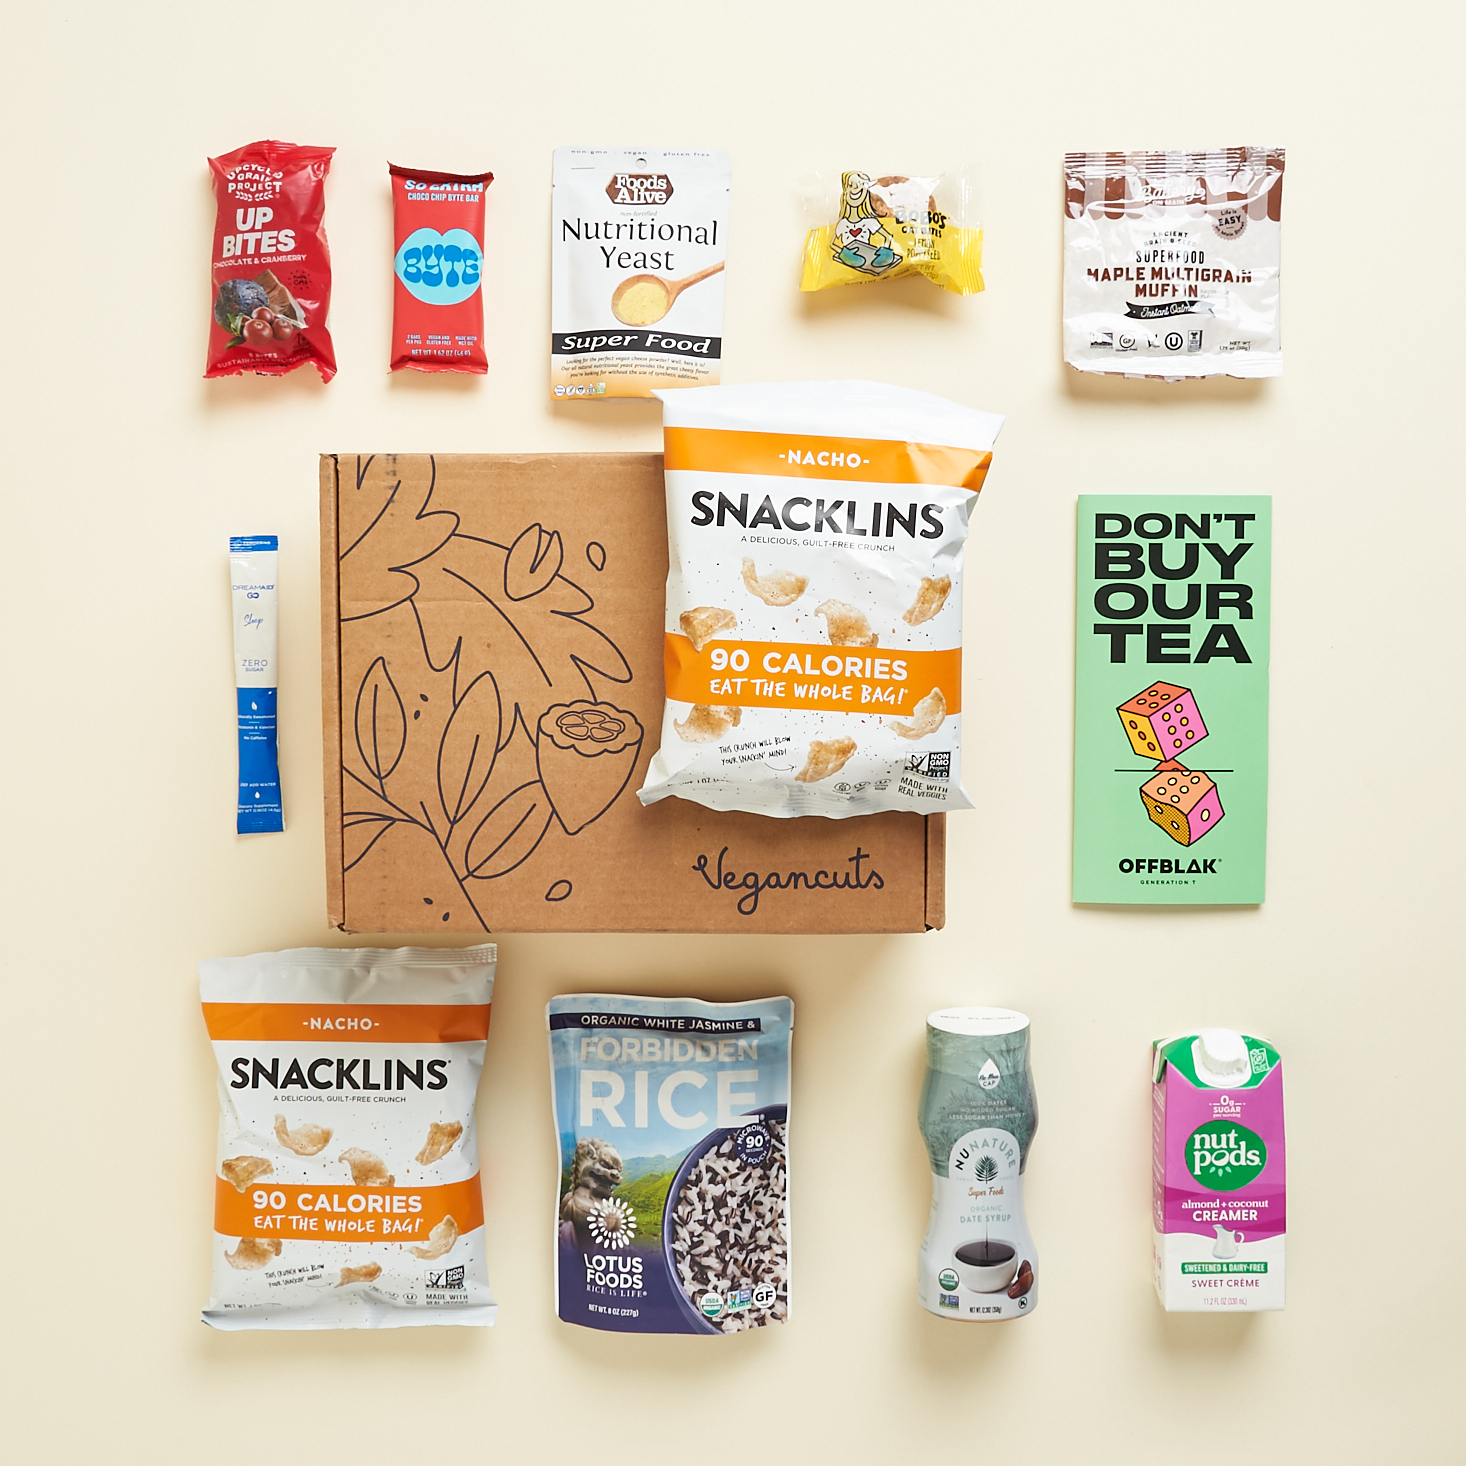 Vegancuts Snack Box Review + Coupon – May 2021